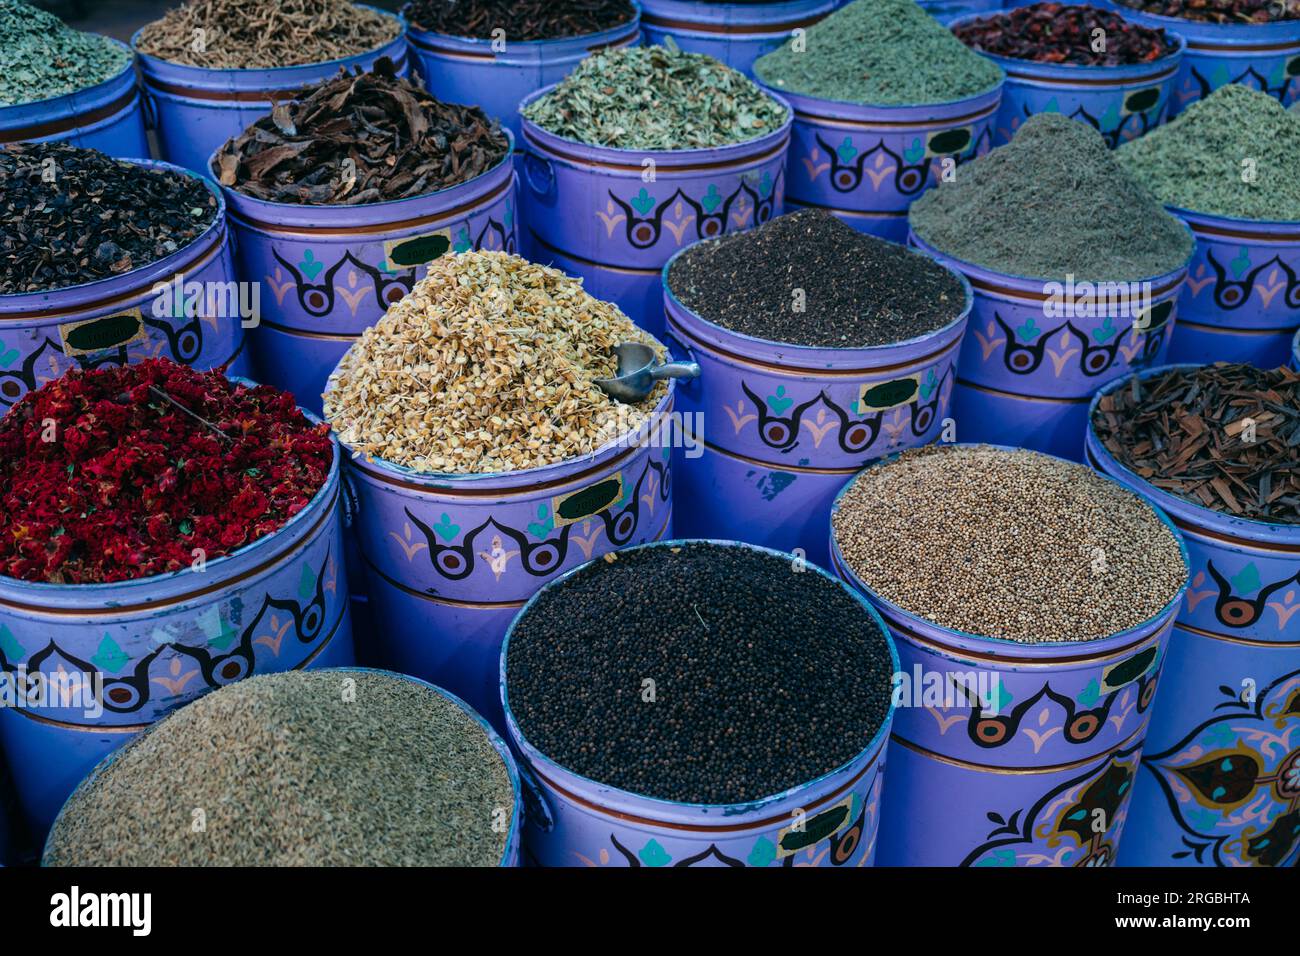 Traditional medina shops bazaar markets in Morocco  Stock Photo